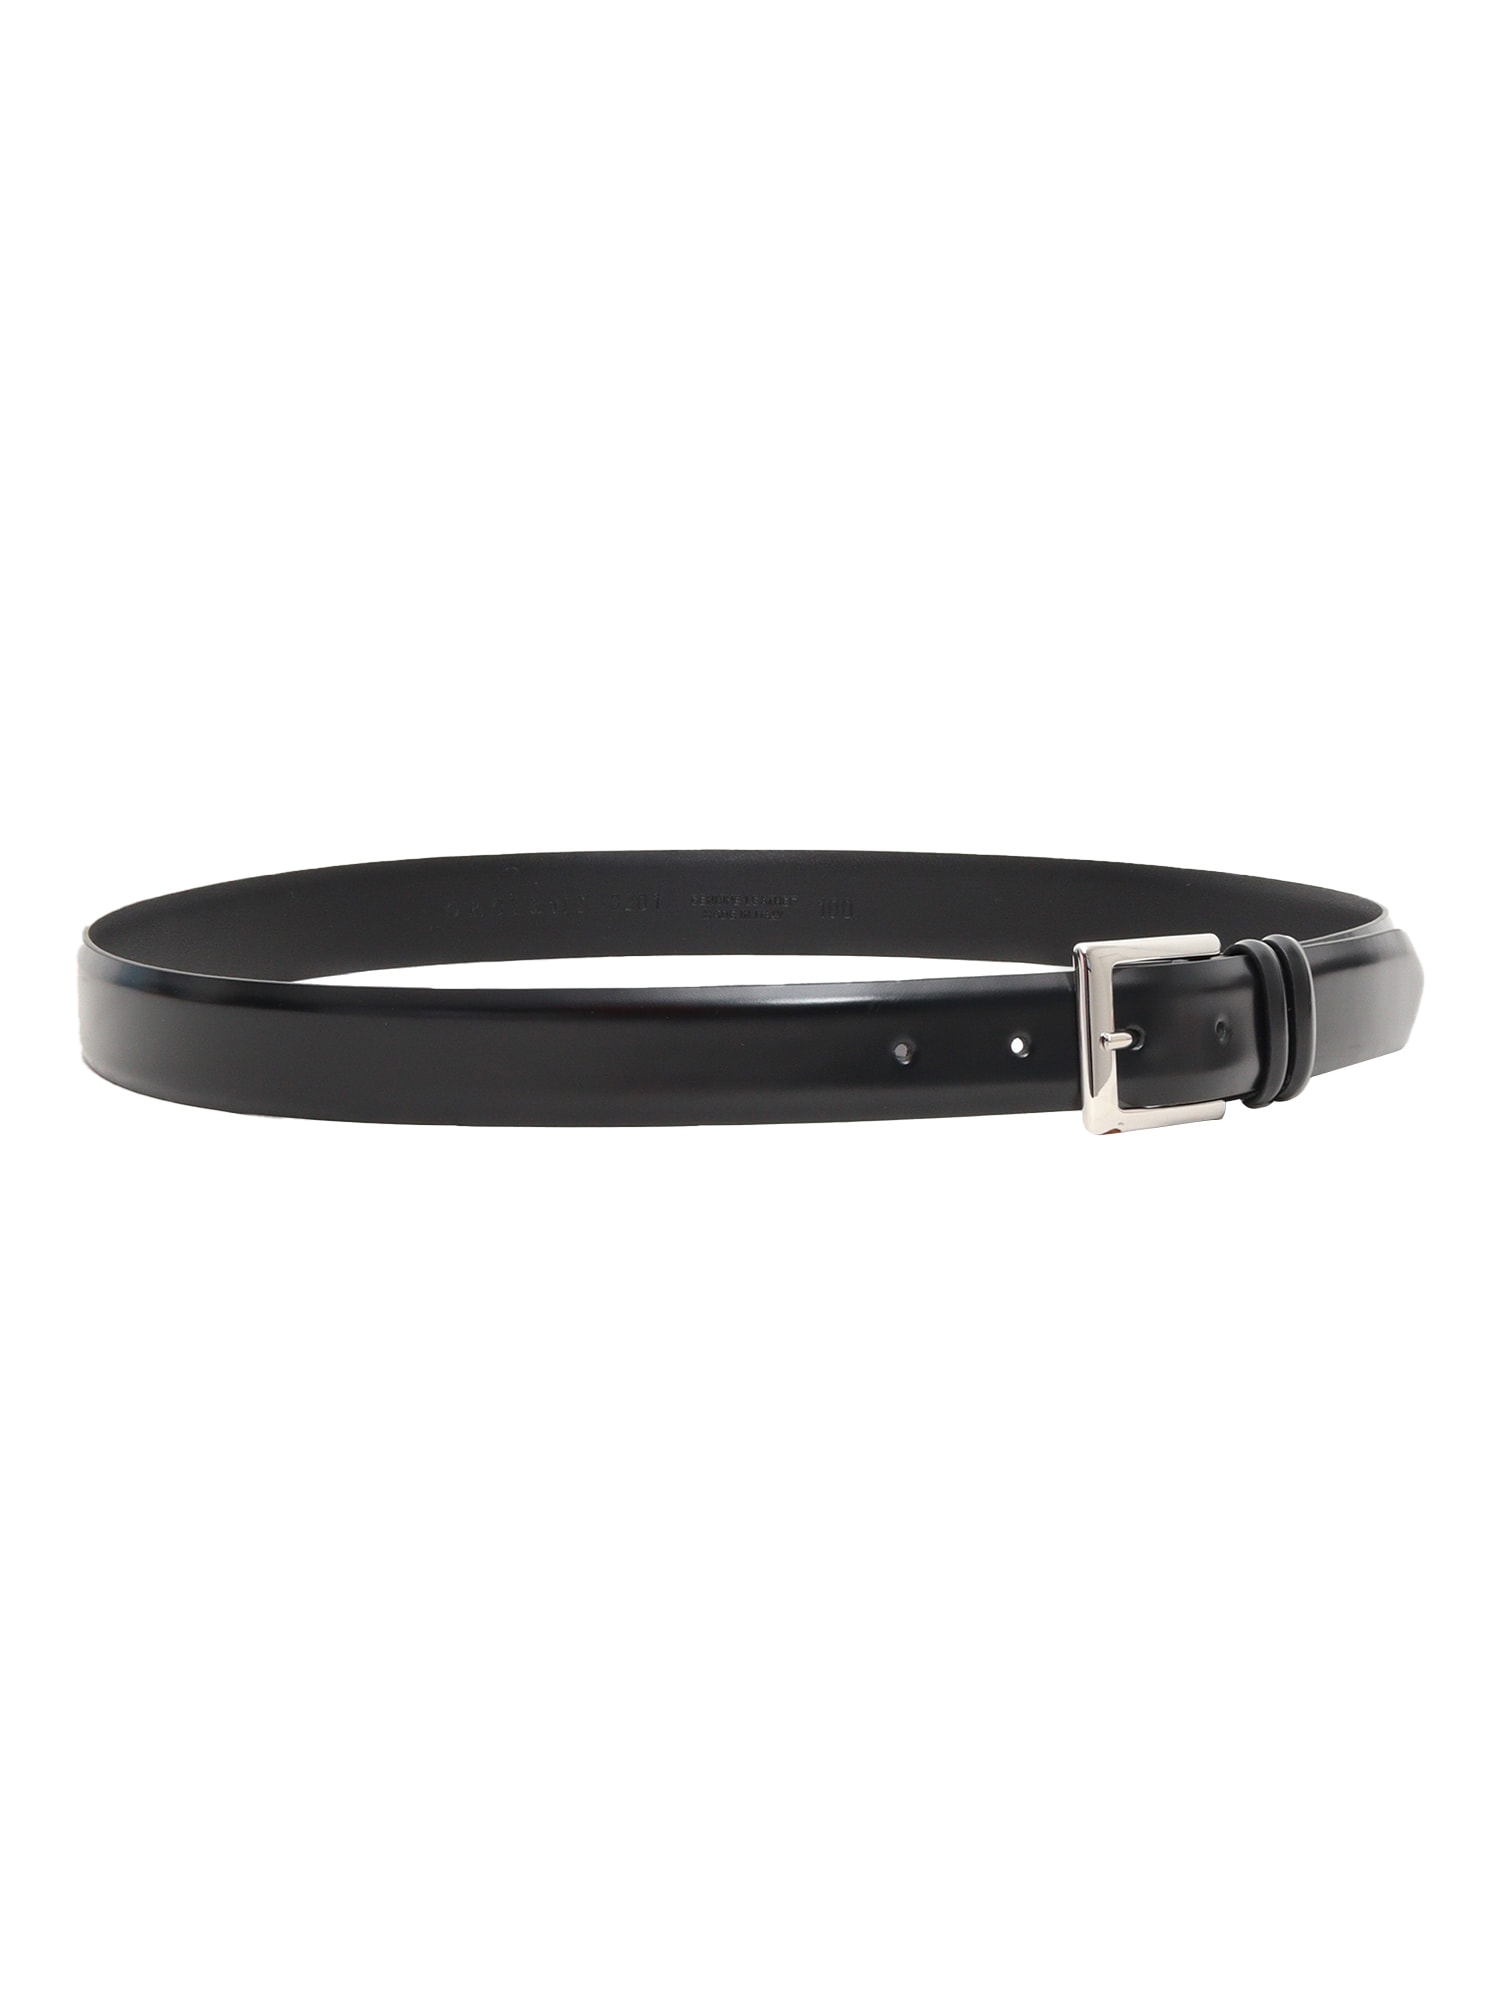 Shop Orciani Black Leather Belt